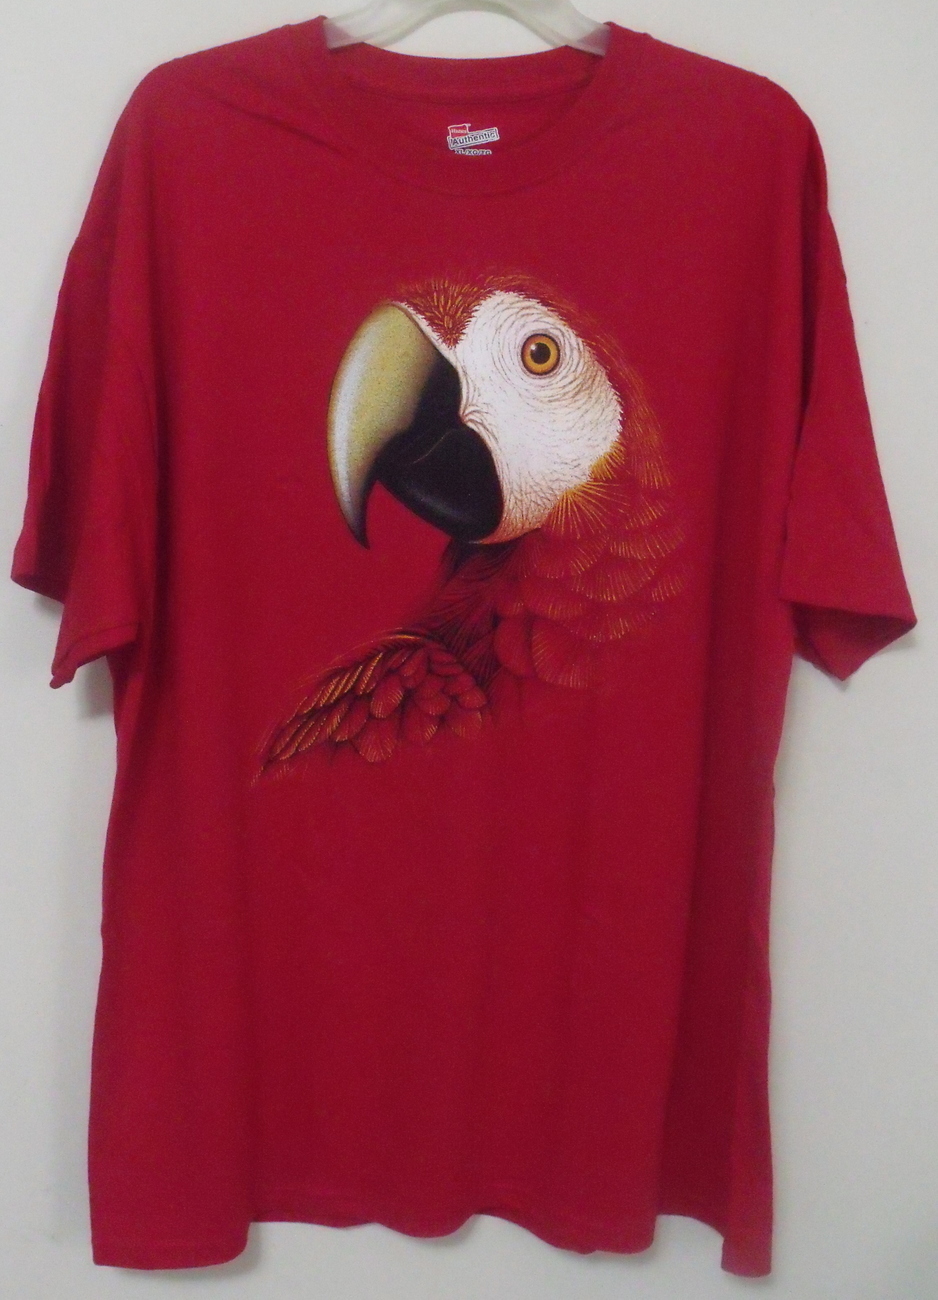 Unisex Hanes NWOT Red Short Sleeve T Shirt Size XL - $7.95